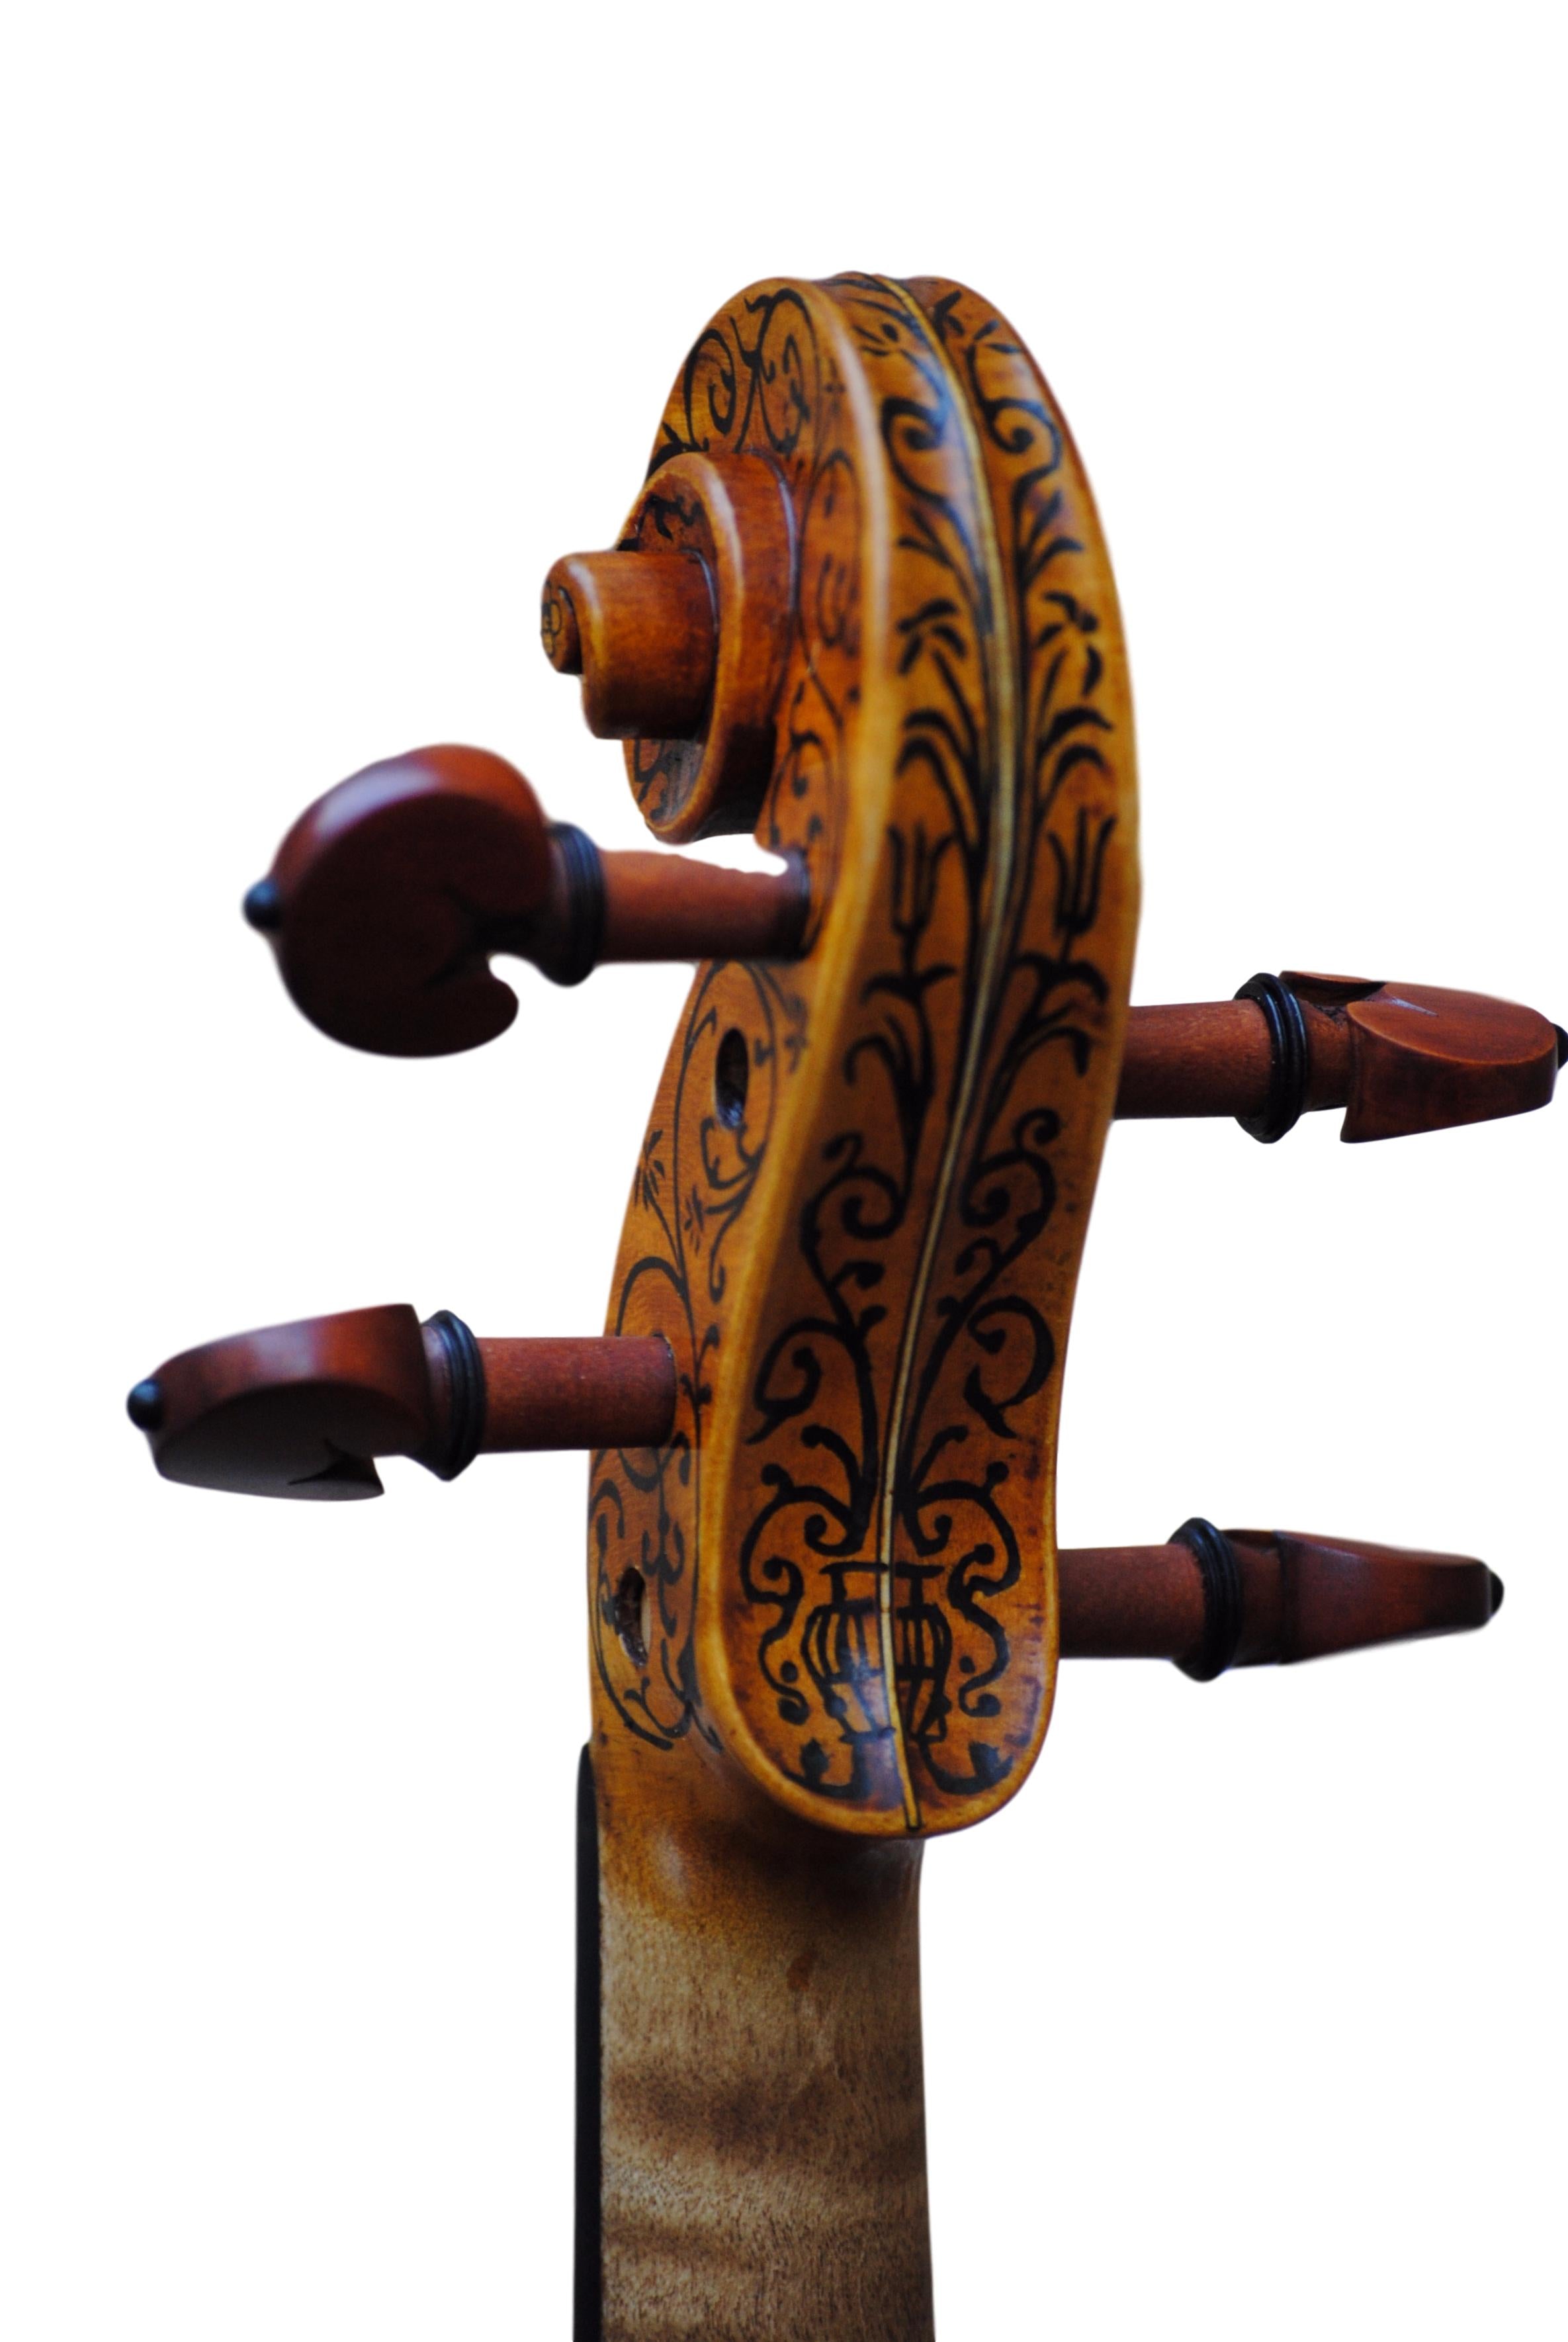 Antonio Stradivari "Hellier" with decoration